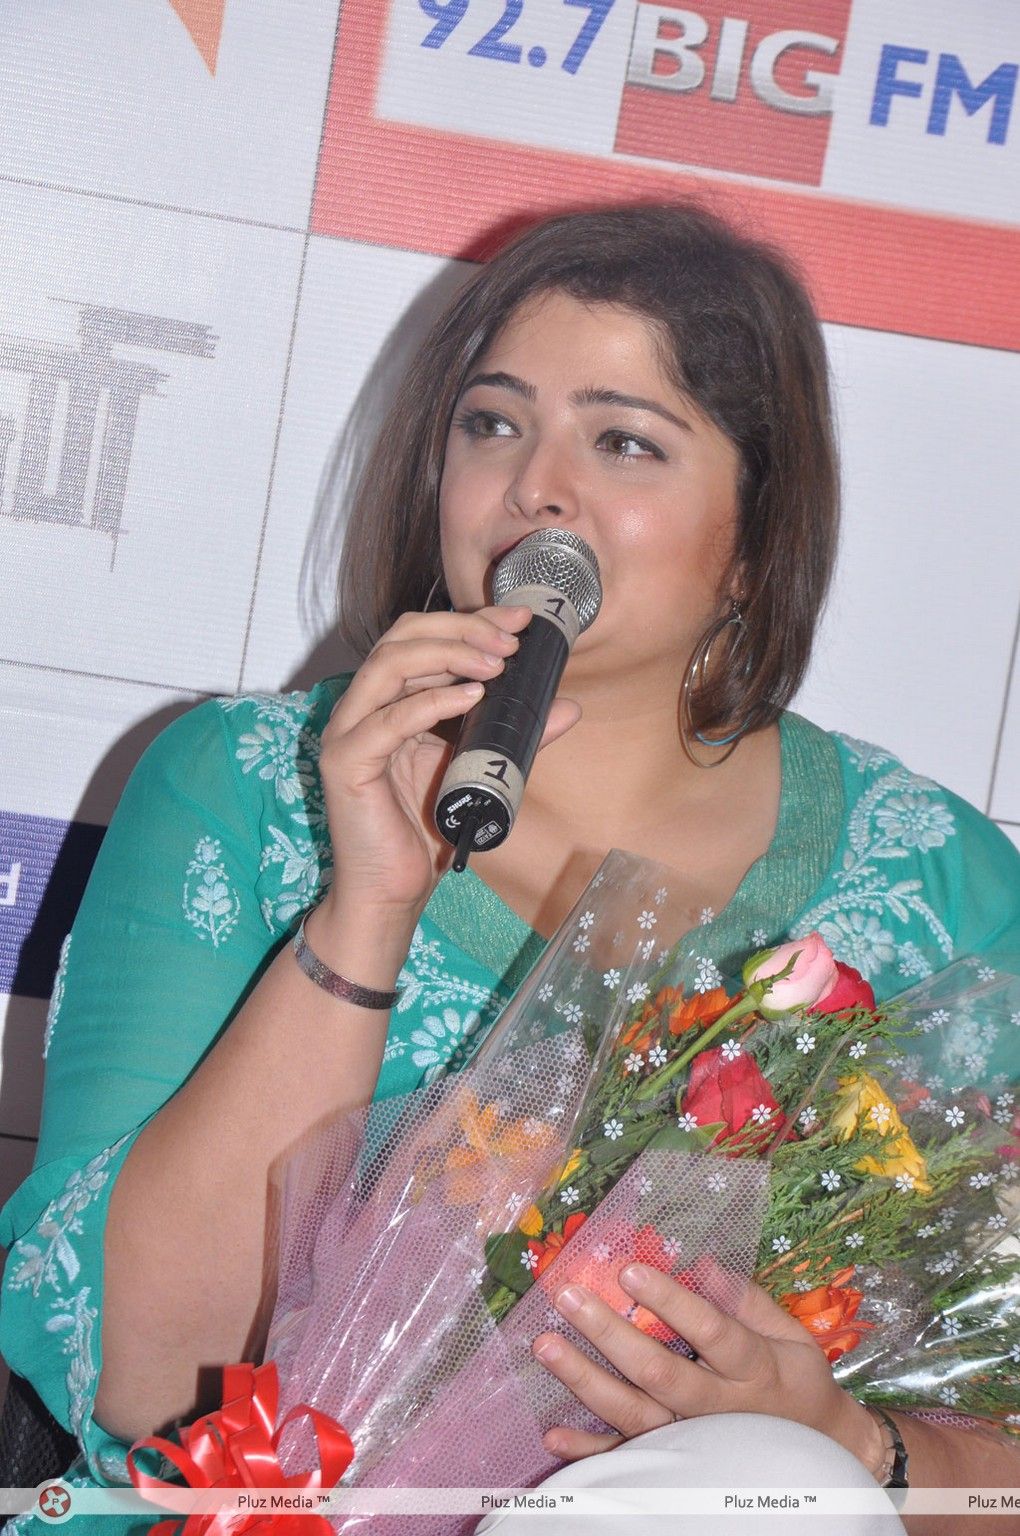 Vasundhara Das - Big Tamil Melody Awards 2012 Press Meet Stills | Picture 218630